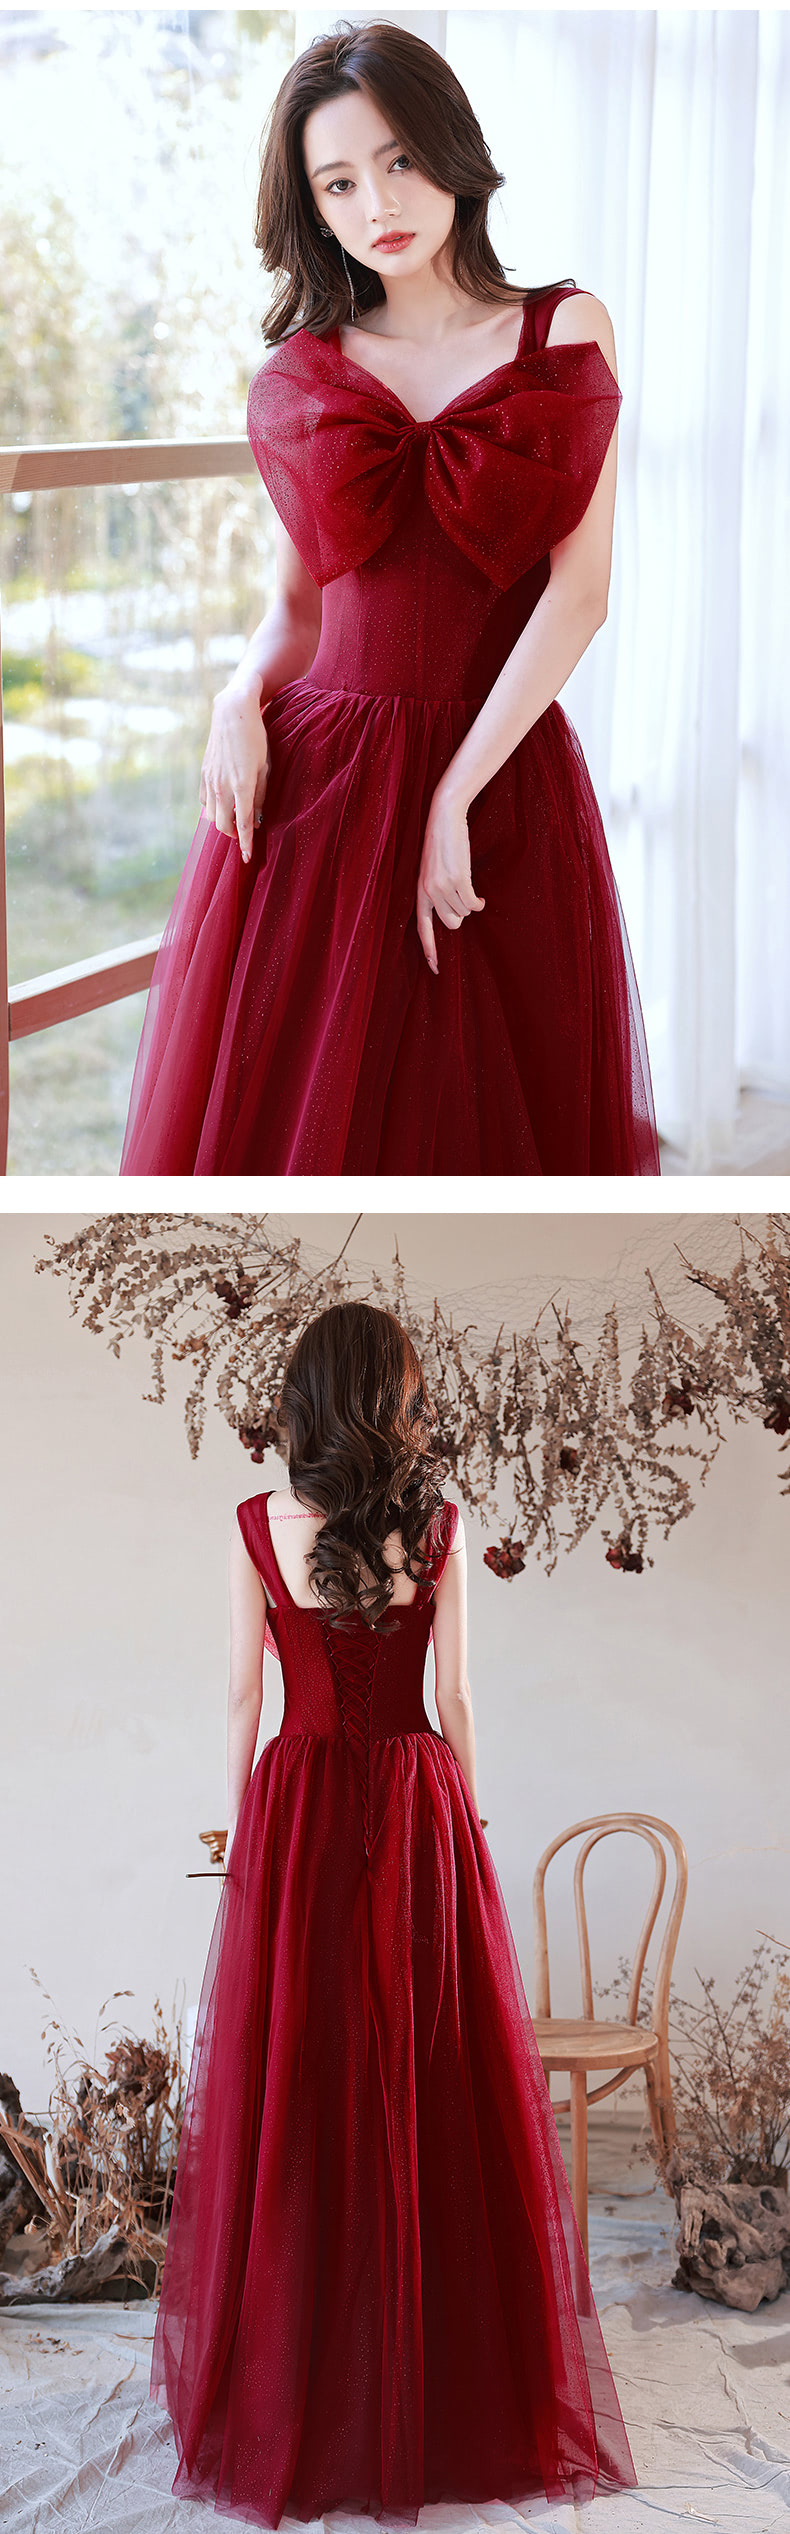 Elegant-Classy-Prom-Evening-Party-DressLong-Aesthetic-Formal-Gown11.jpg